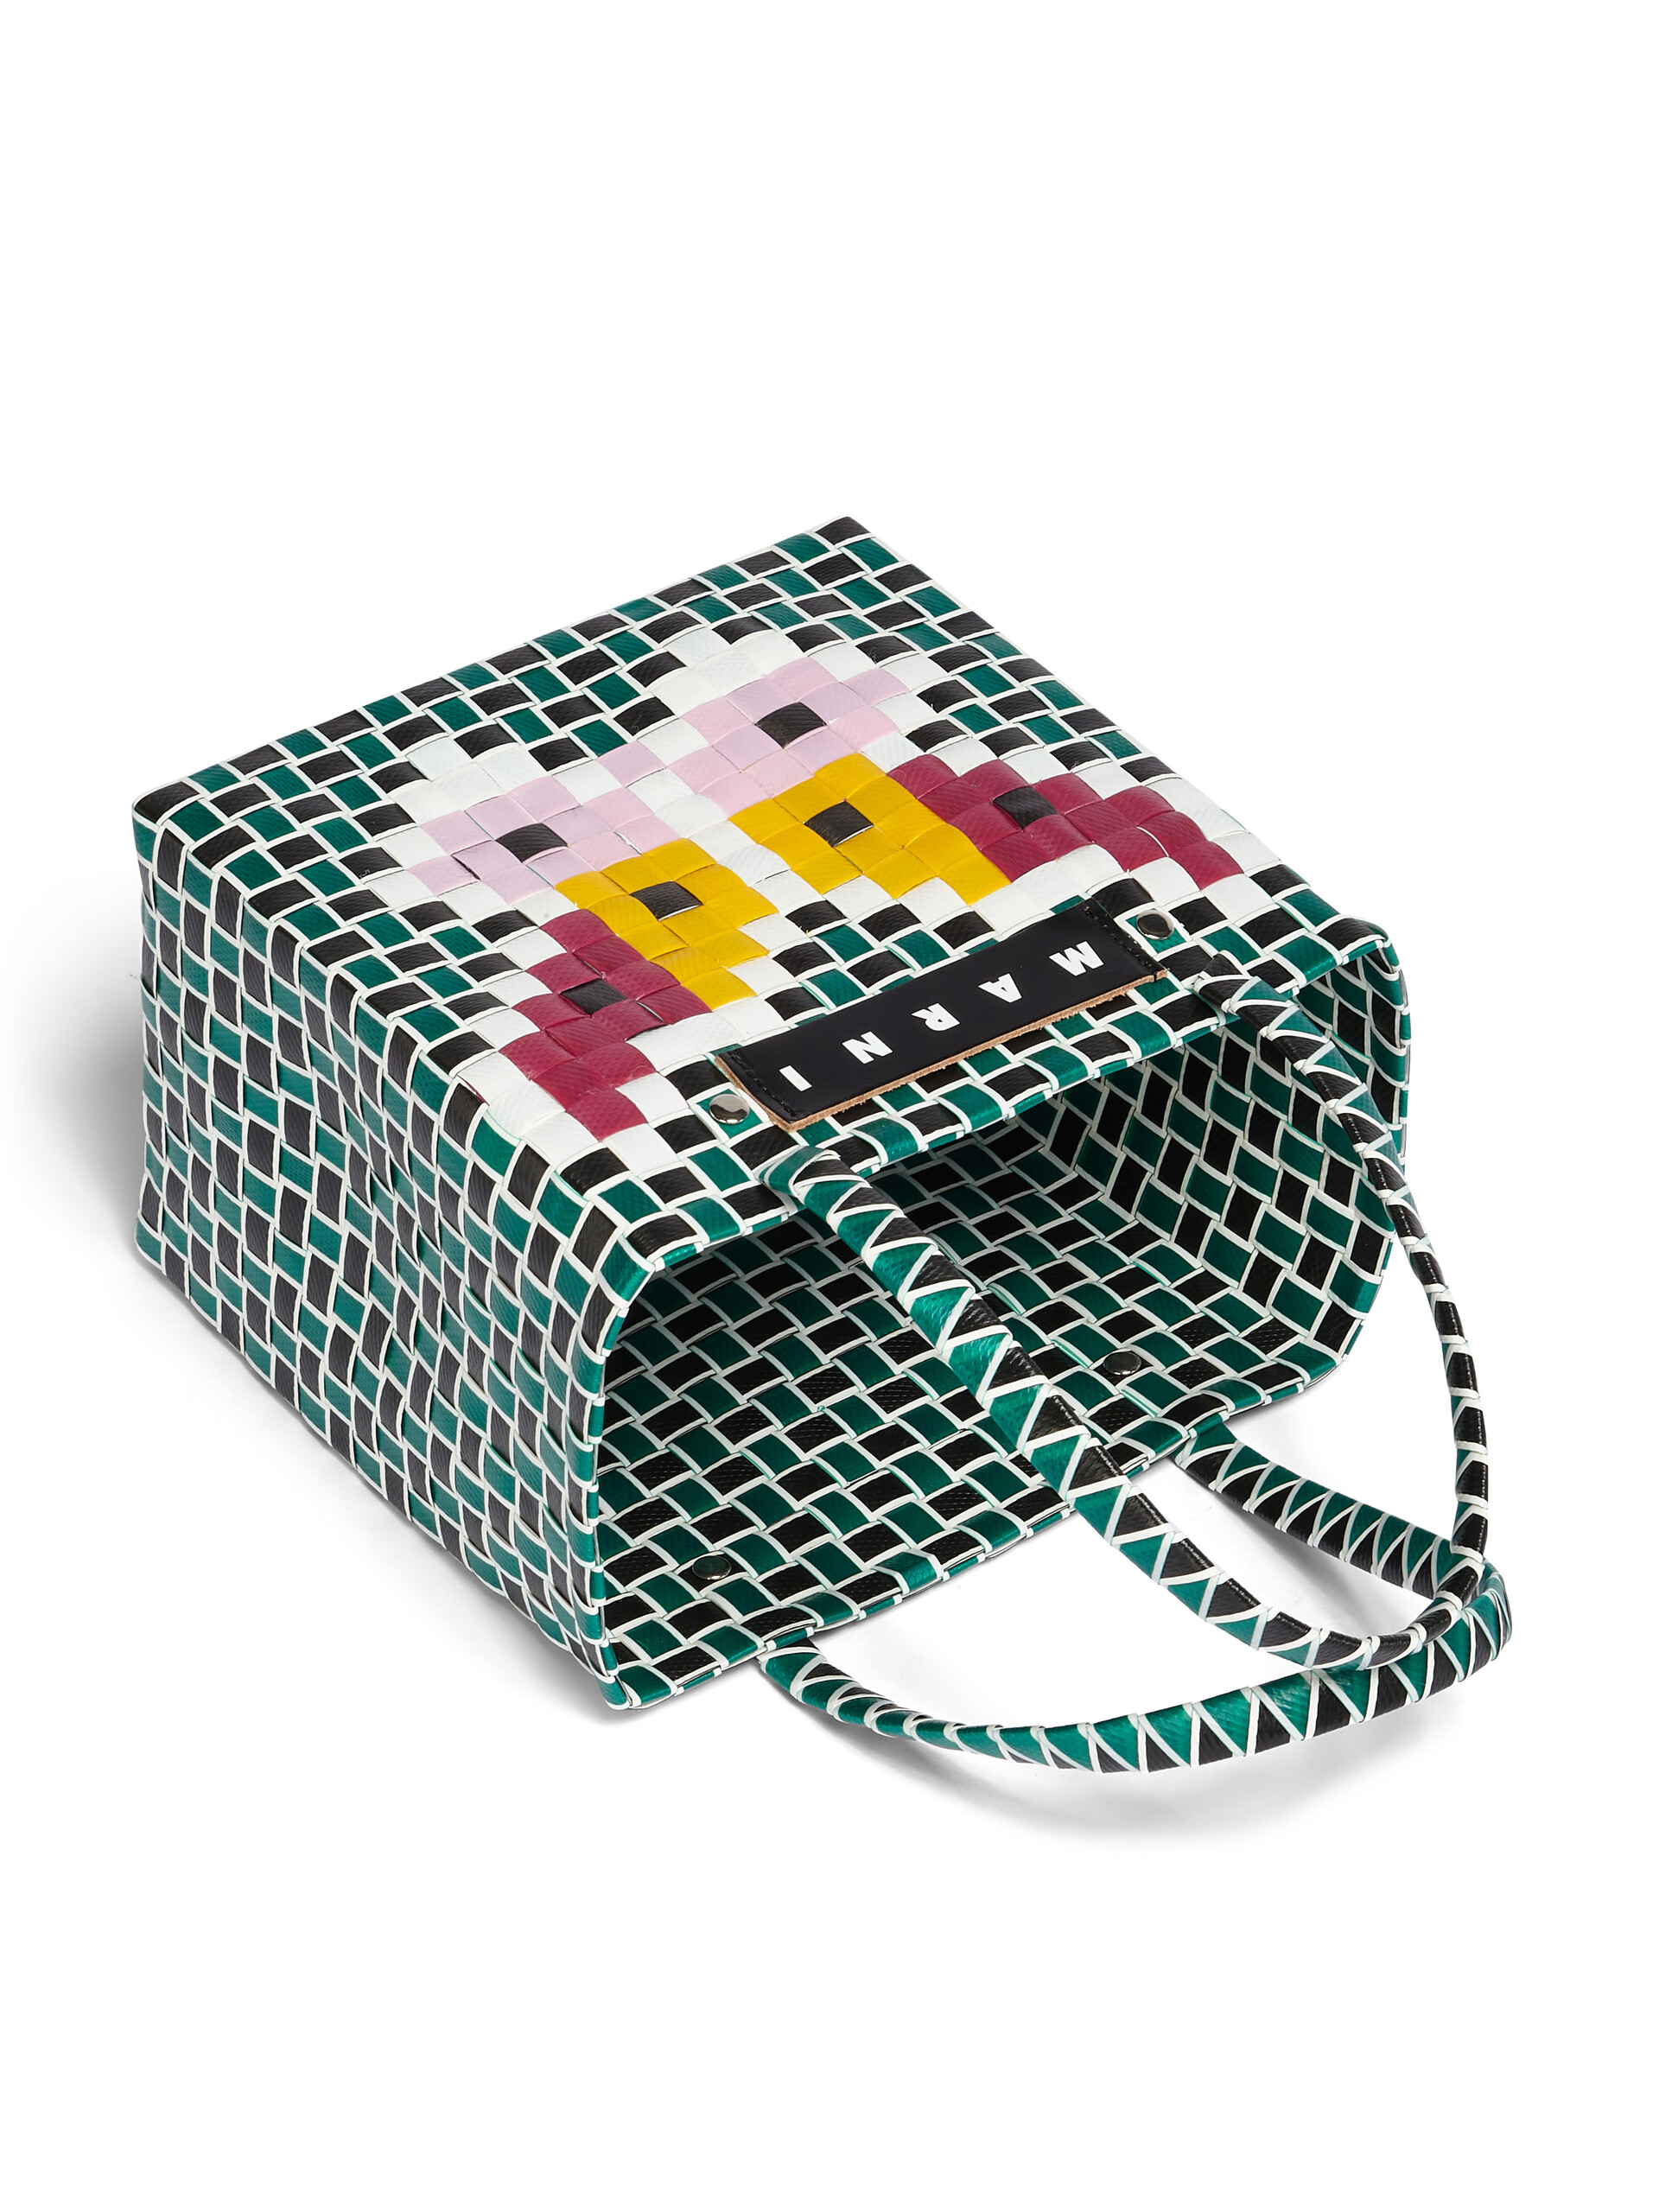 MARNI MARKET FLOWER BASKET bag in green butterfly motif - Bags - Image 4